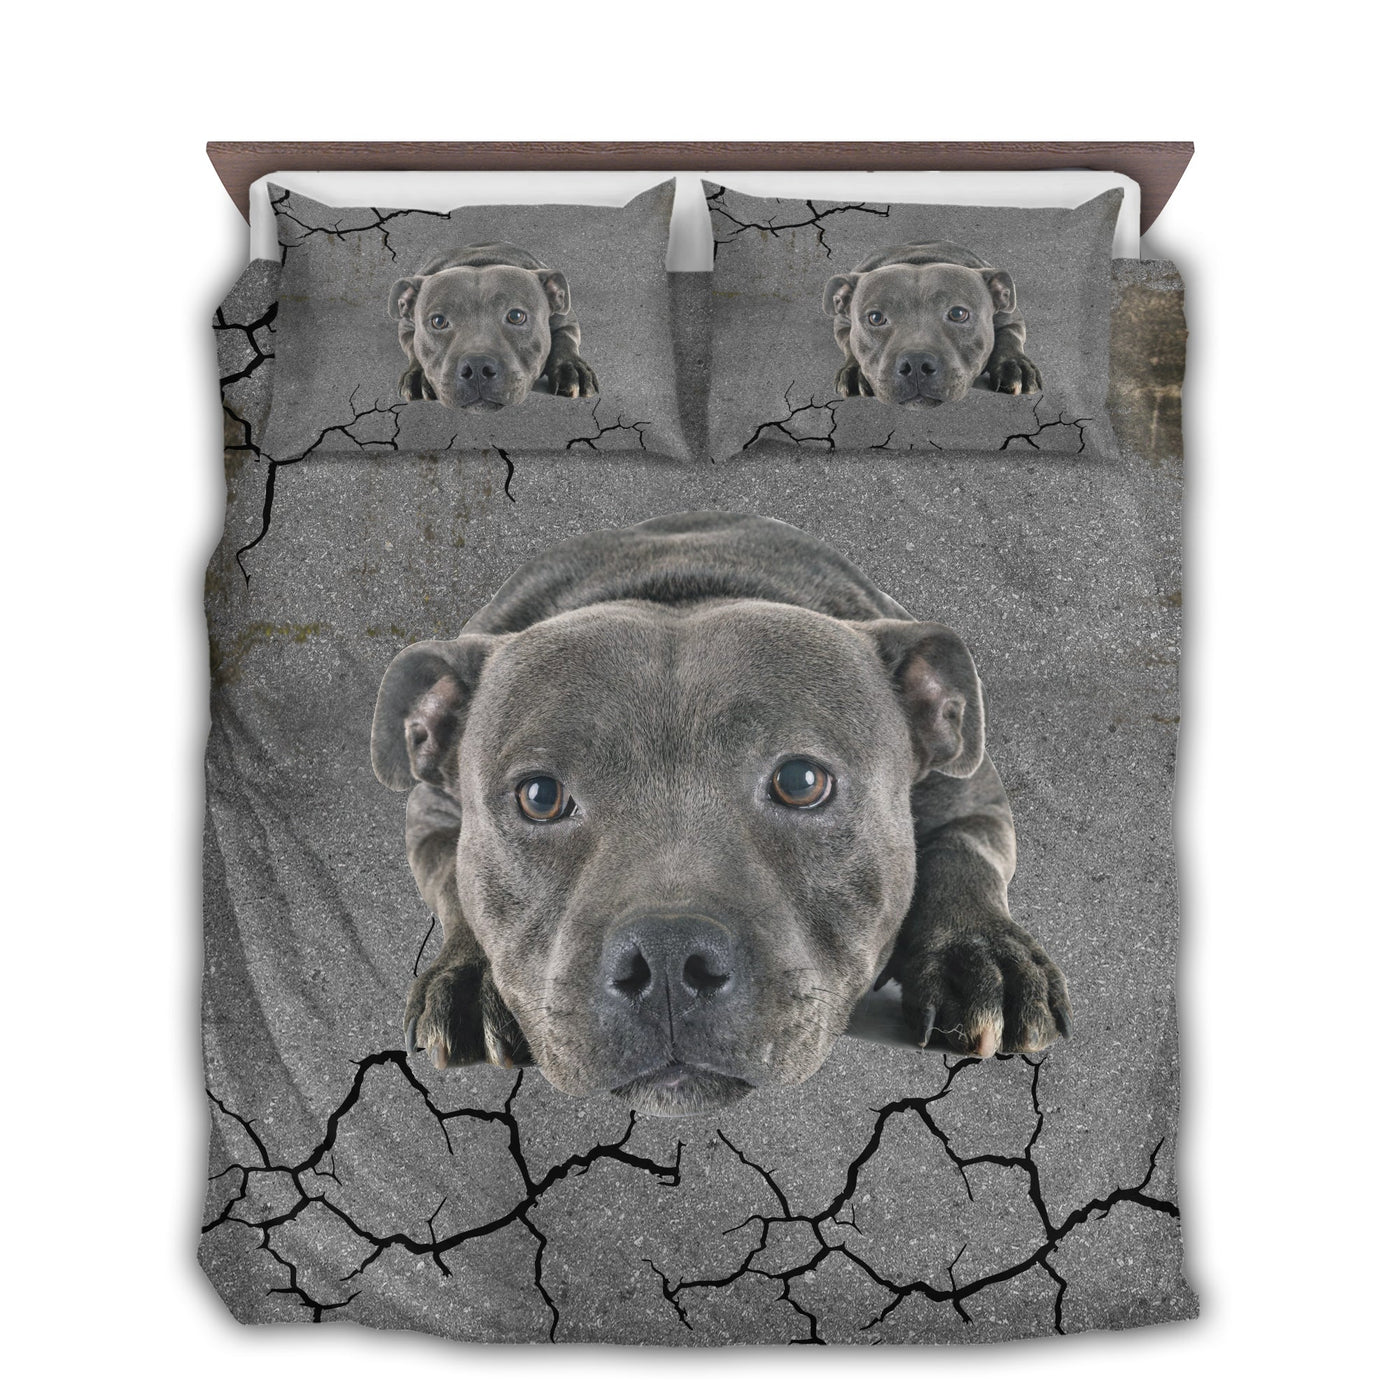 US / Twin (68" x 86") Pit Bull Dog Sleeping Grey Style - Bedding Cover - Owls Matrix LTD